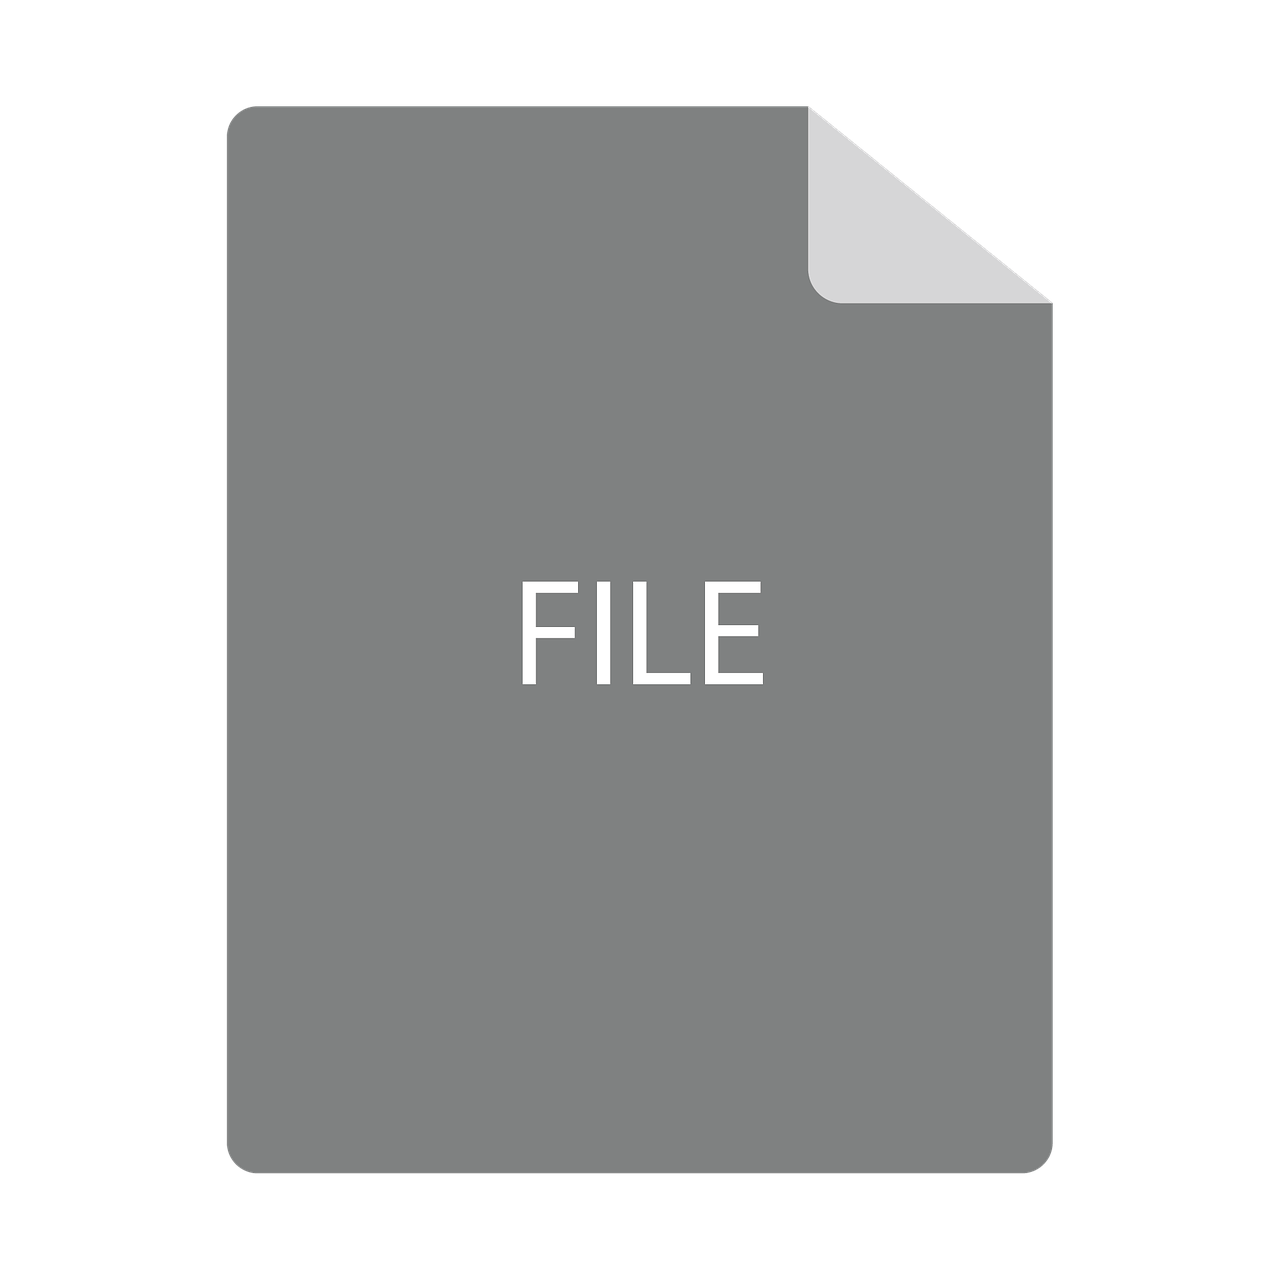 file miniature icon free photo